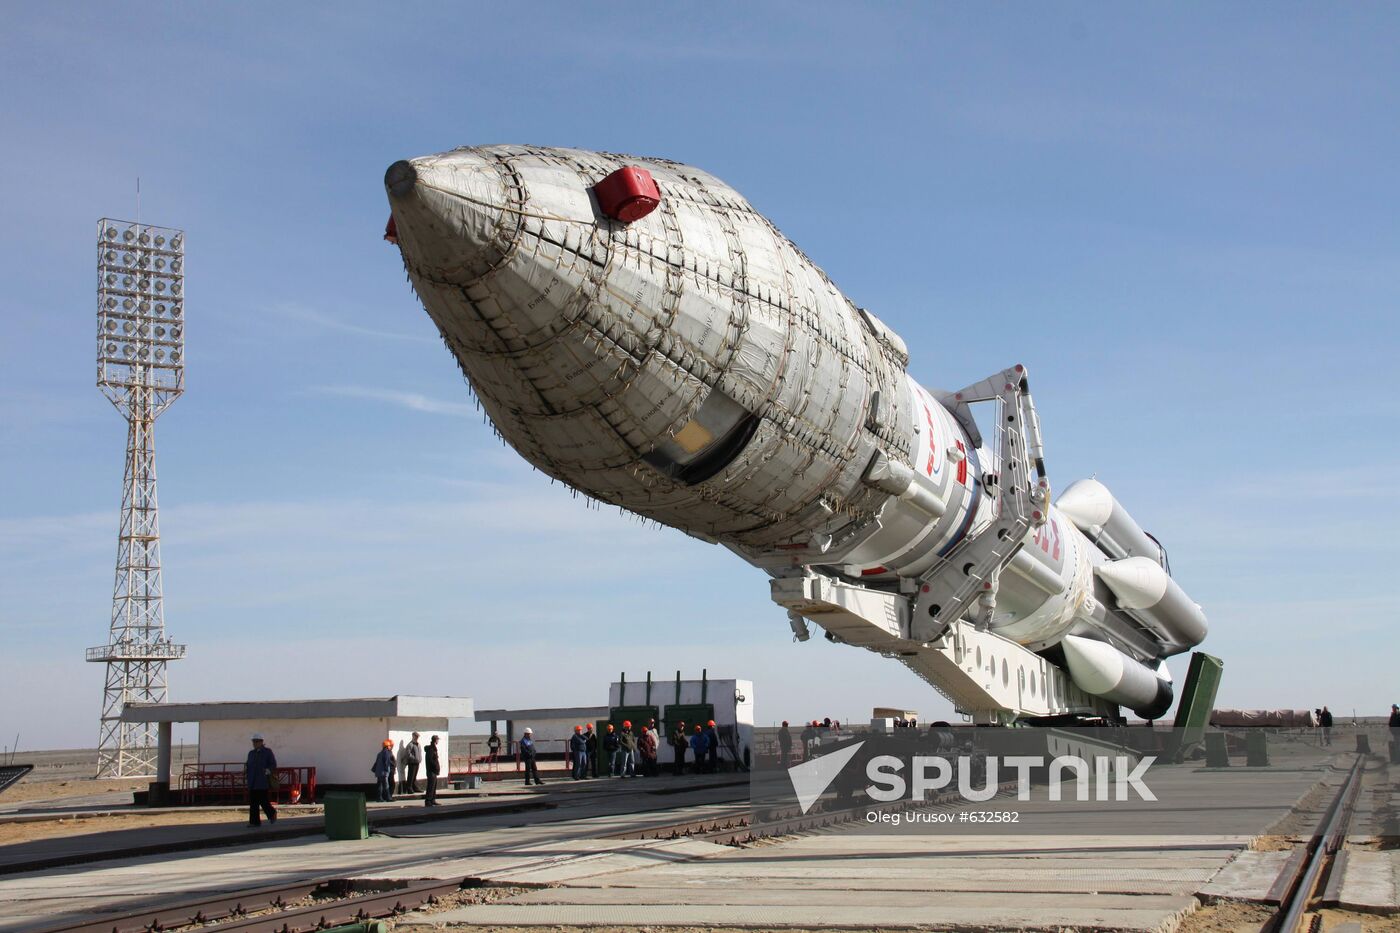 Baikonur readies to launch AMC-4P satellite